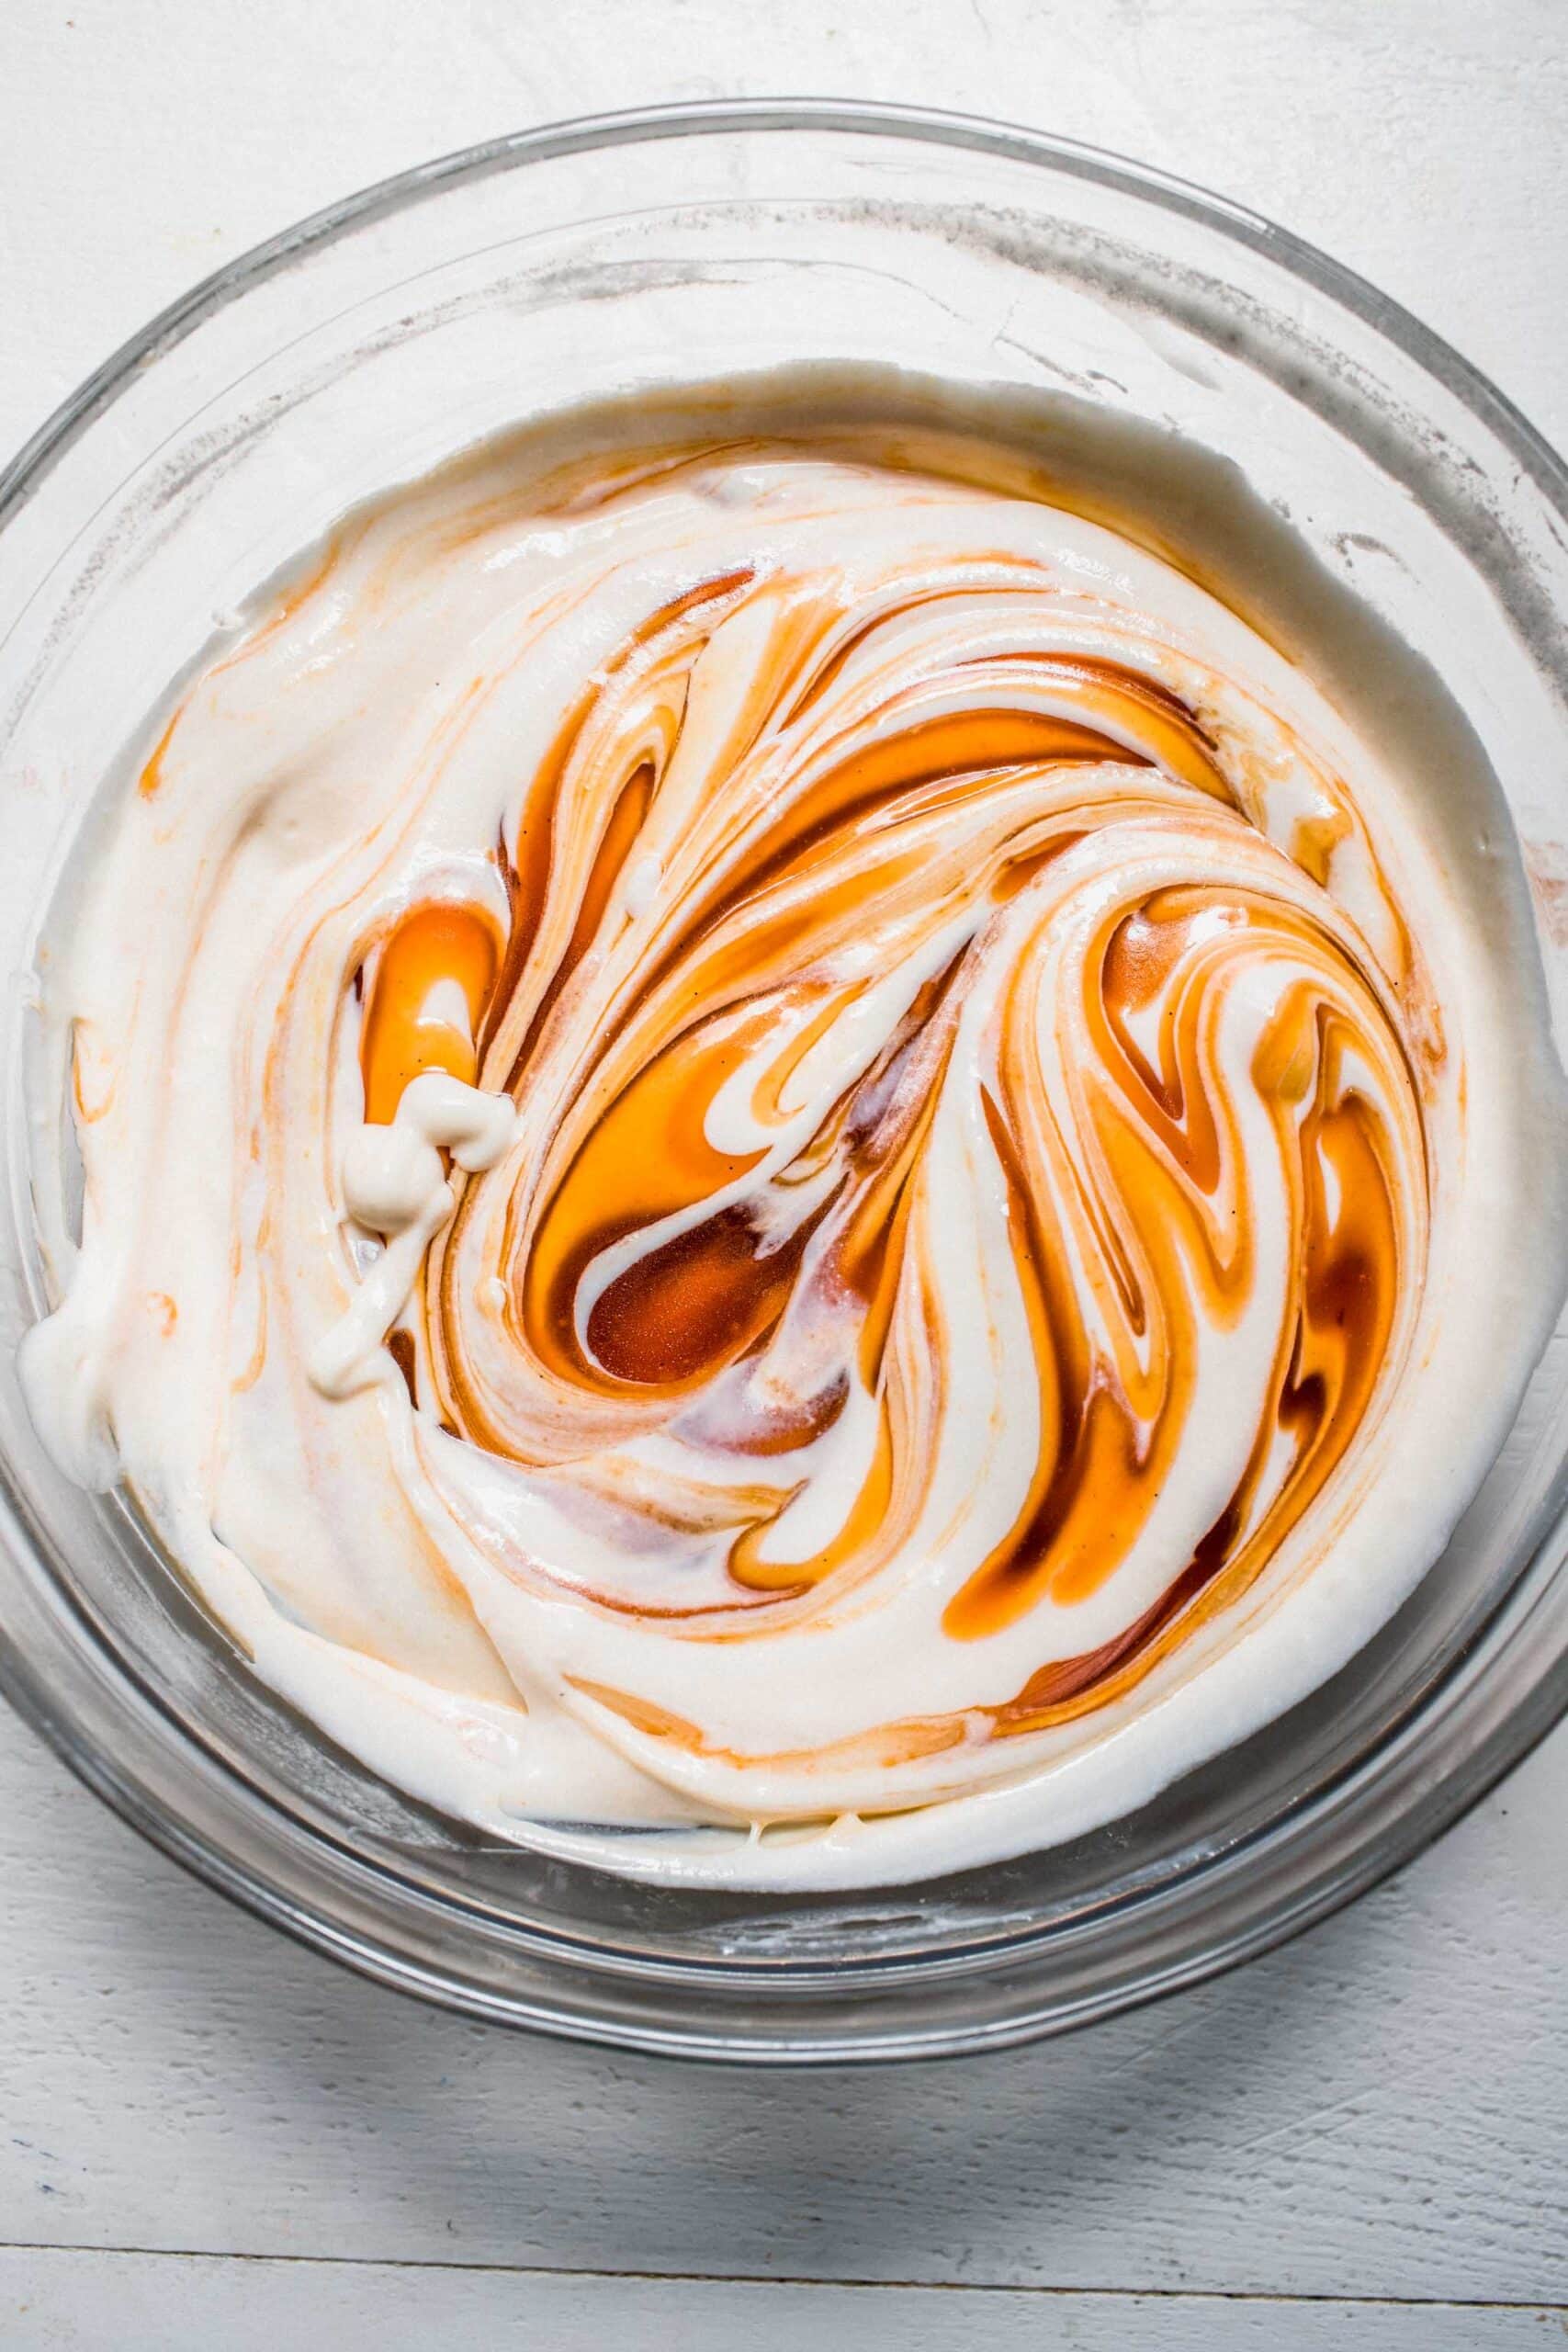 Caramel swirled with yogurt. 